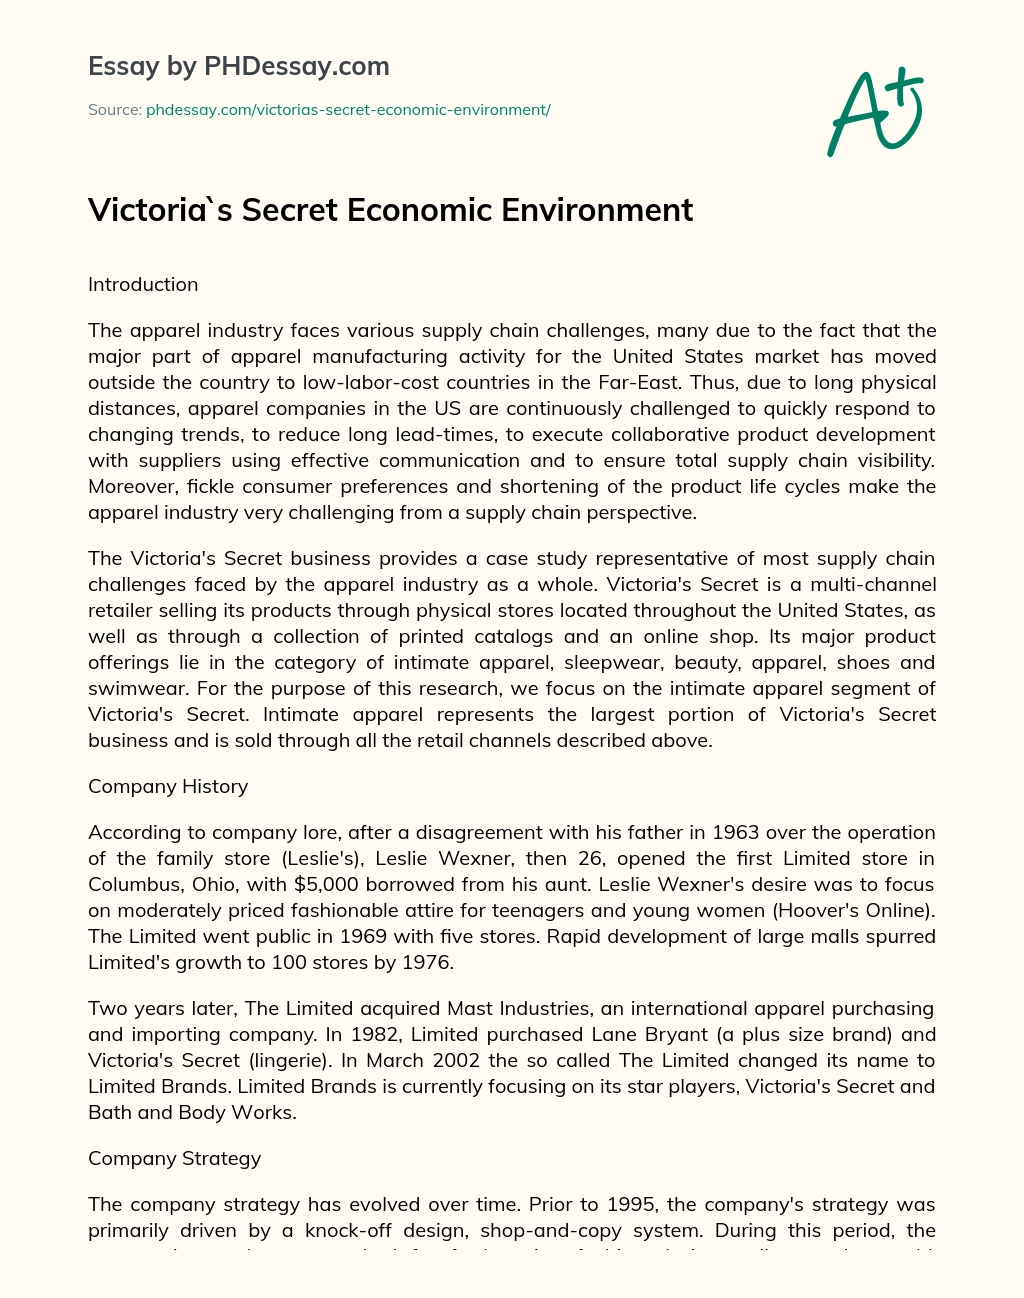 Victoria`s Secret Economic Environment essay